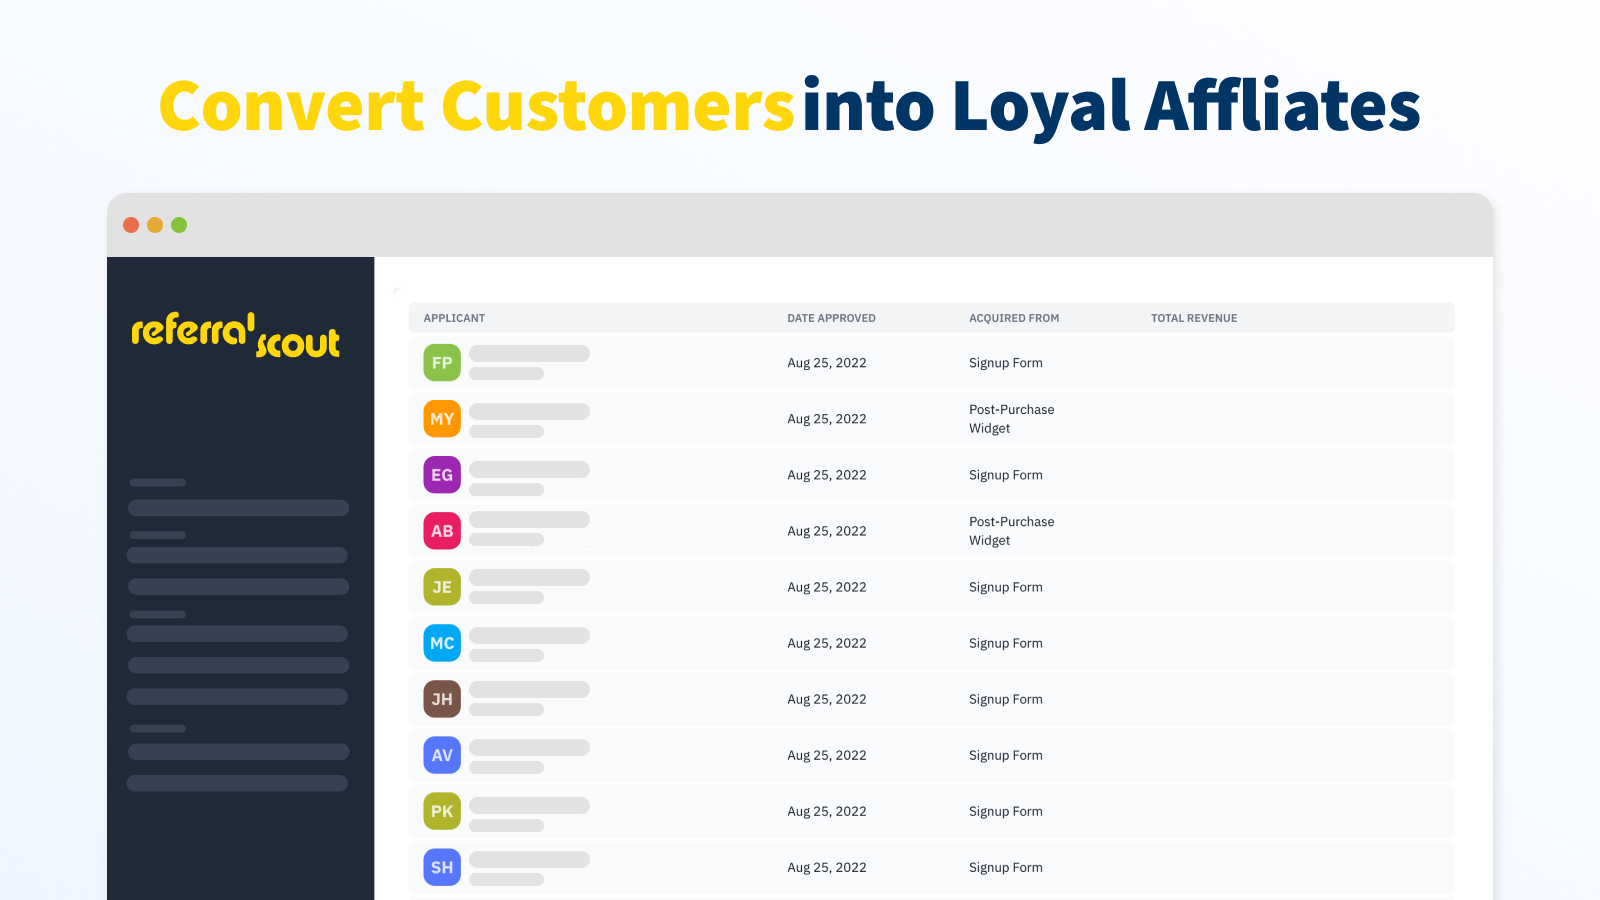 Convert Customers into Loyal Affiliates